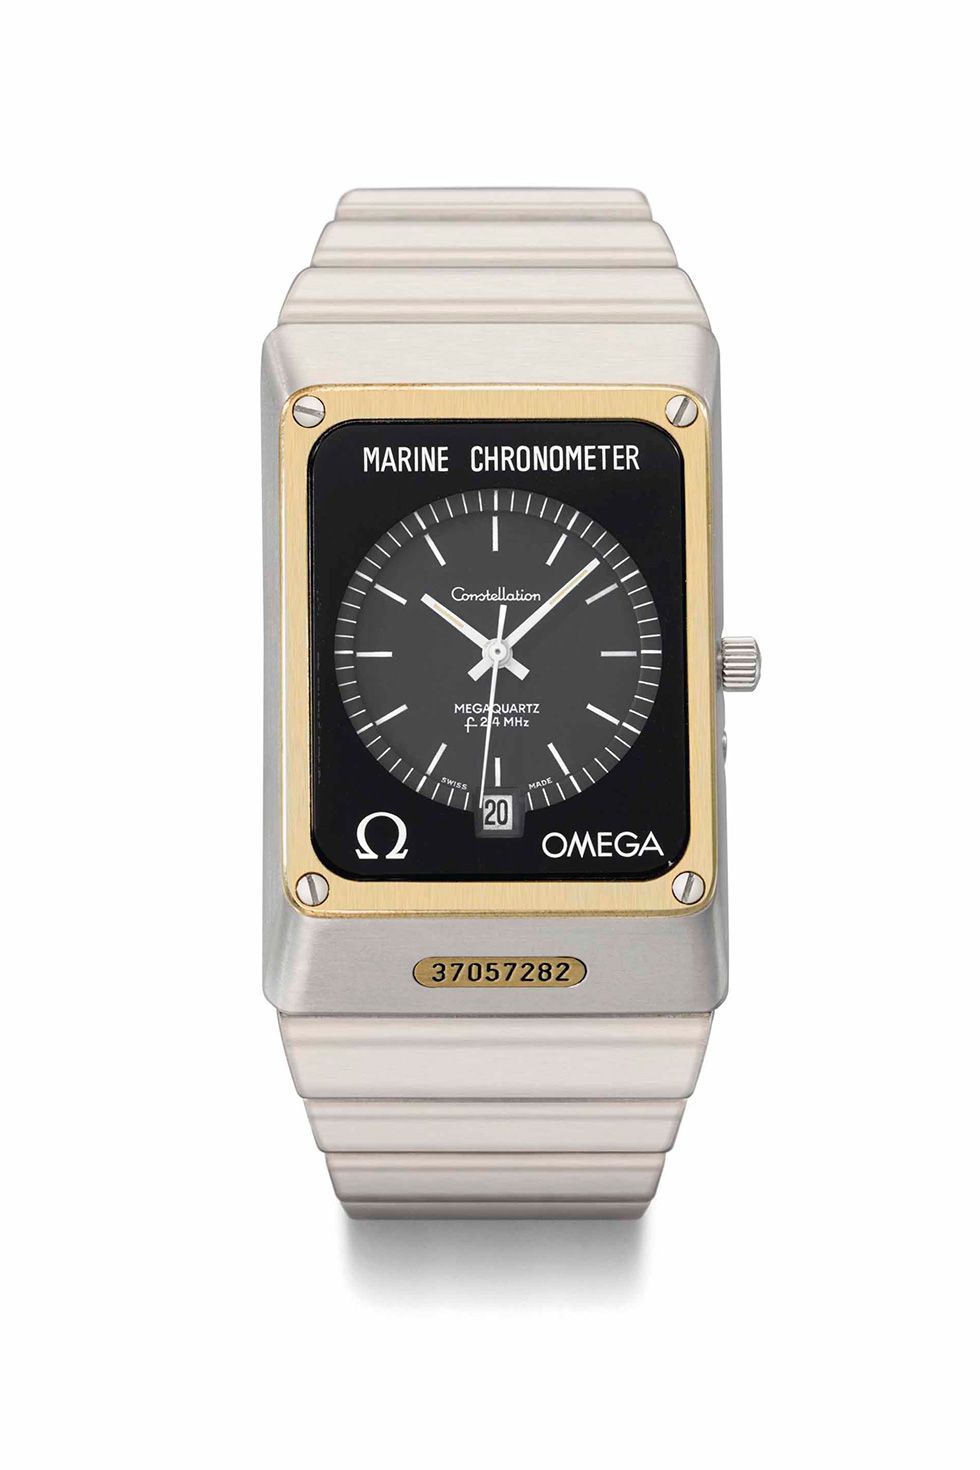 Omega Megaquartz Marine Chronometer